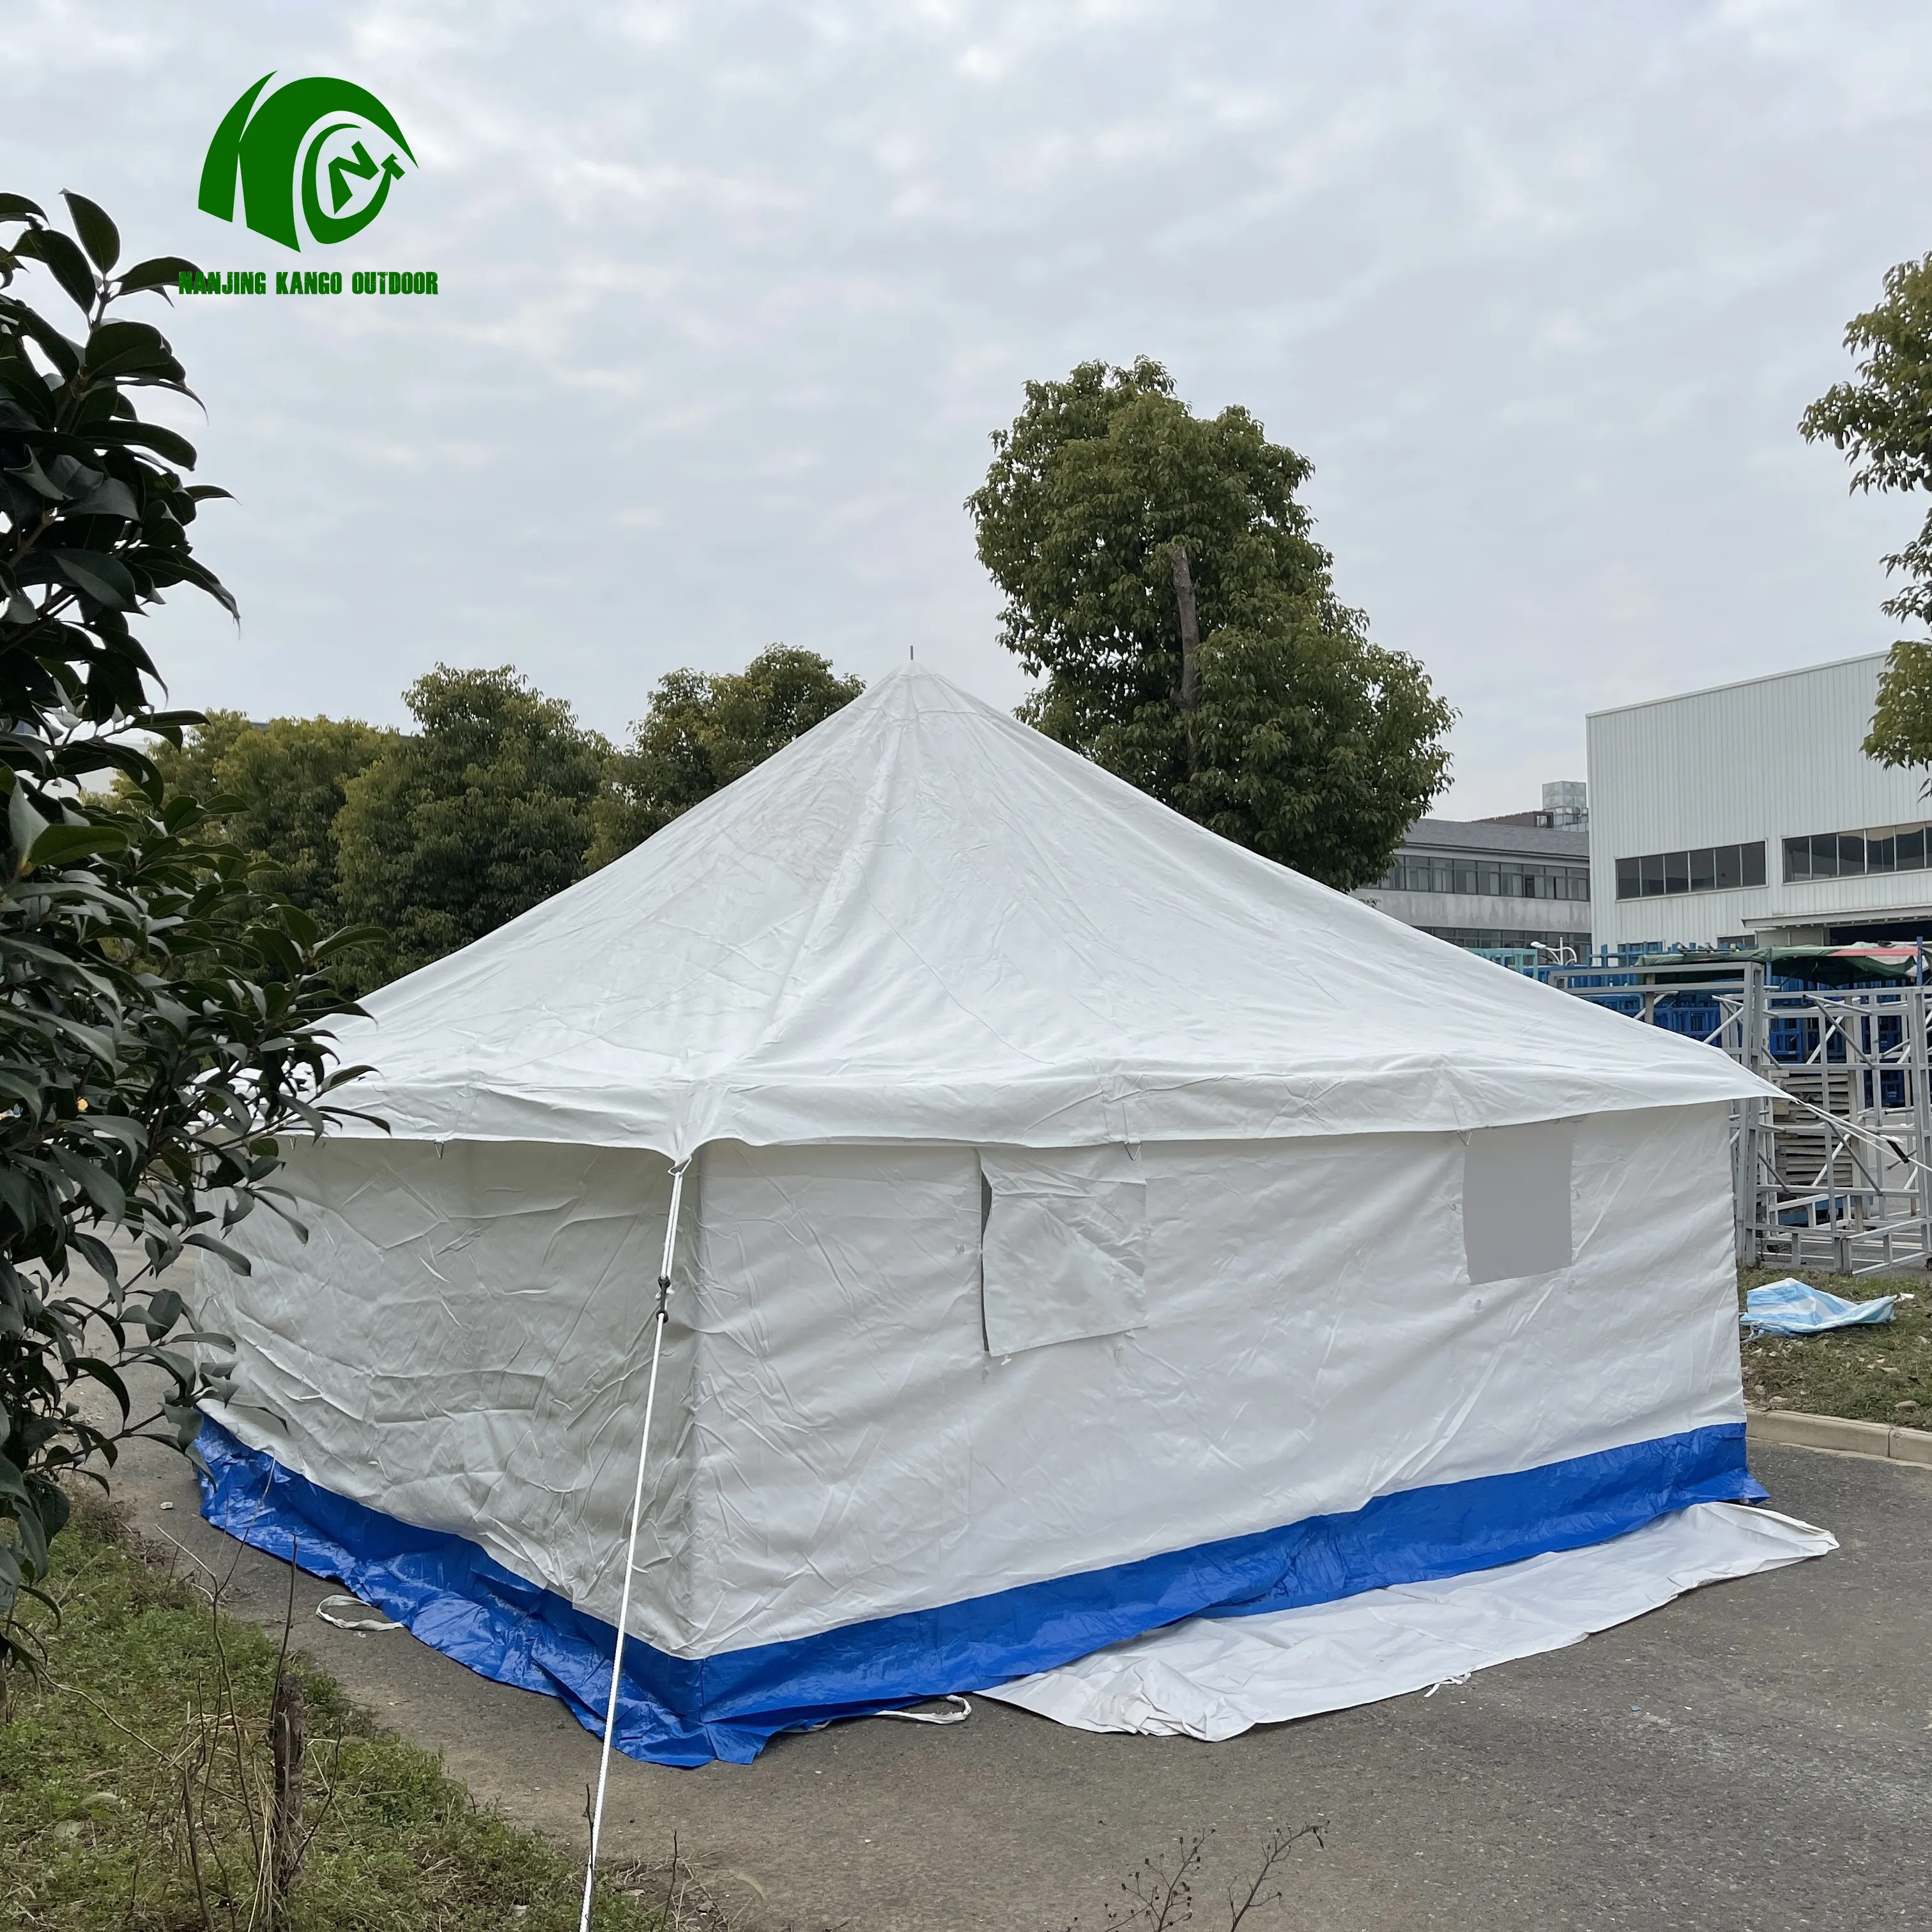 Kango tenda darurat, tenda bencana darurat 4*4M dengan kain oxford 420D 600D dan tenda bantuan bencana ukuran besar PVC